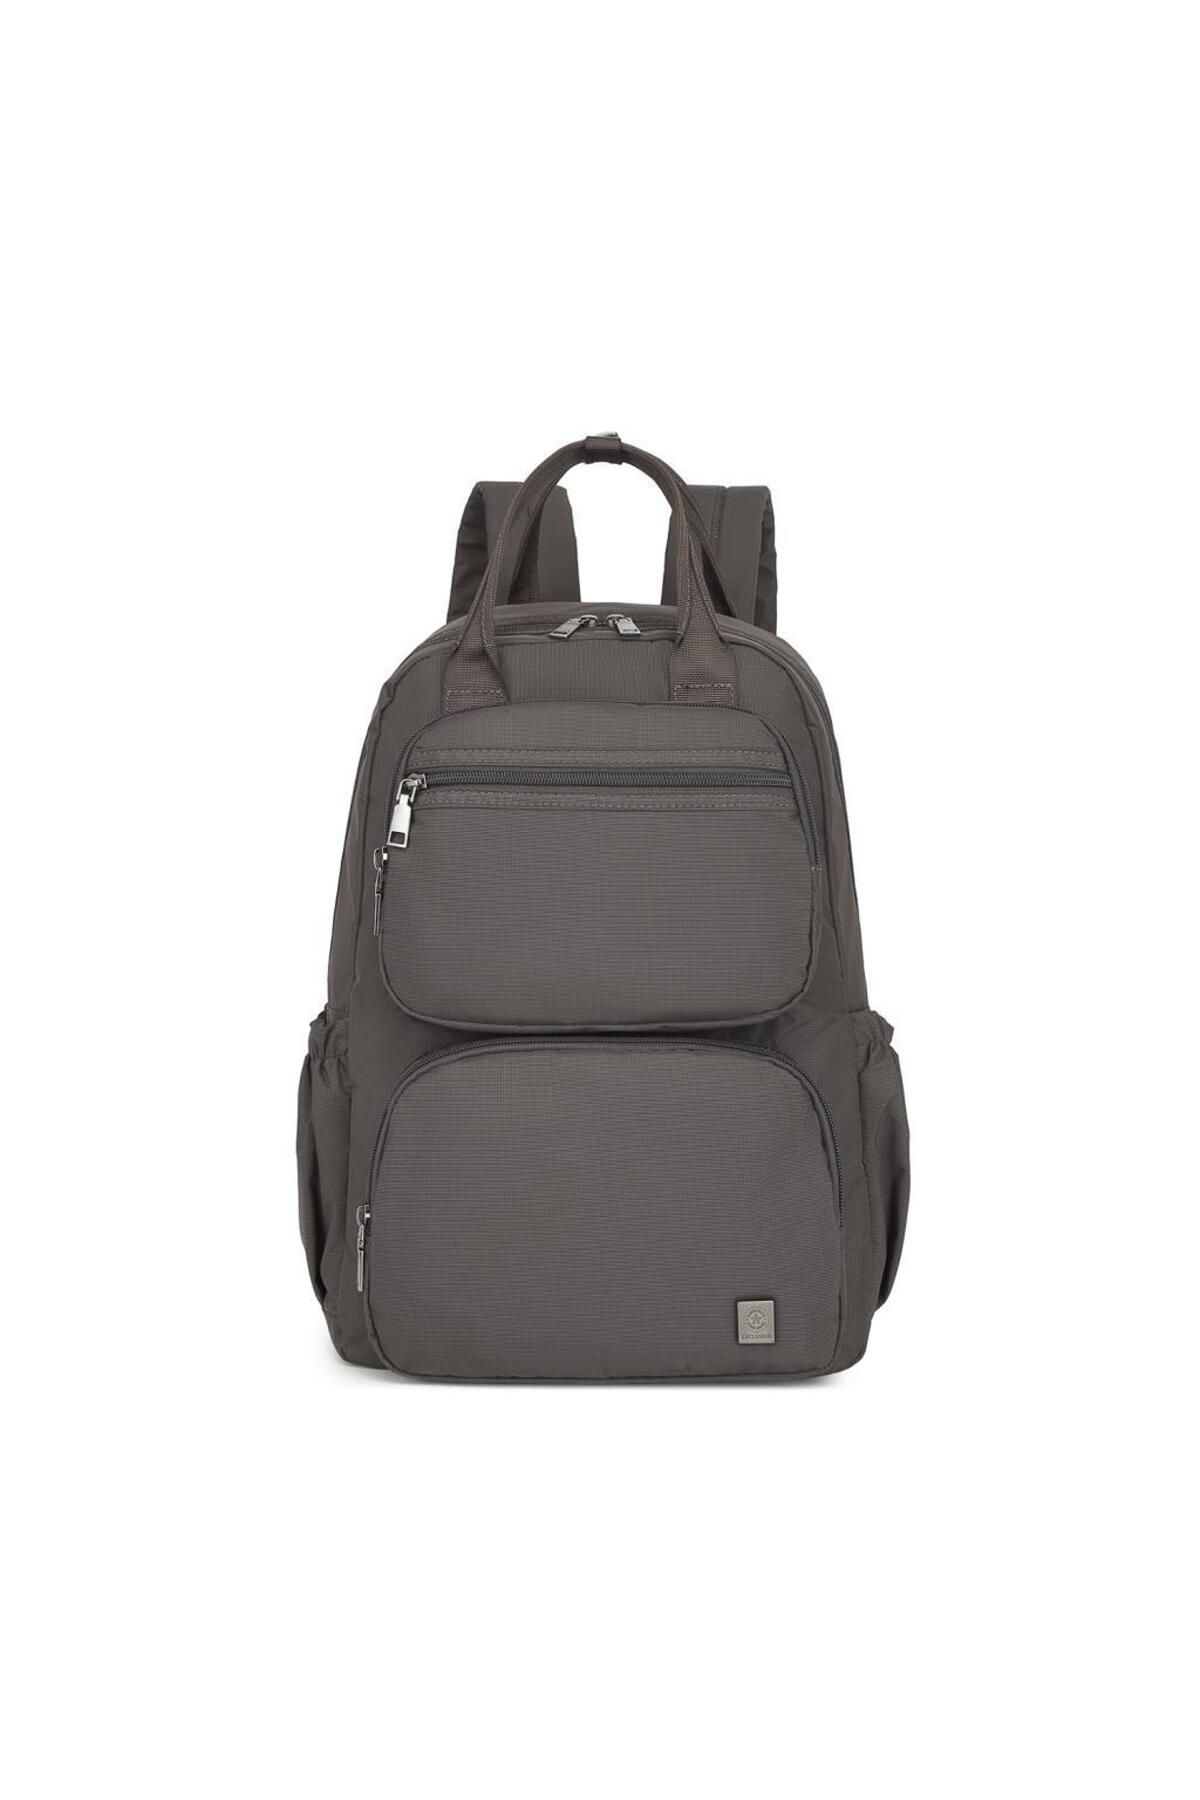 Smart Bags Exclusive Serisi Uniseks Sırt Çantası Smart Bags 8710